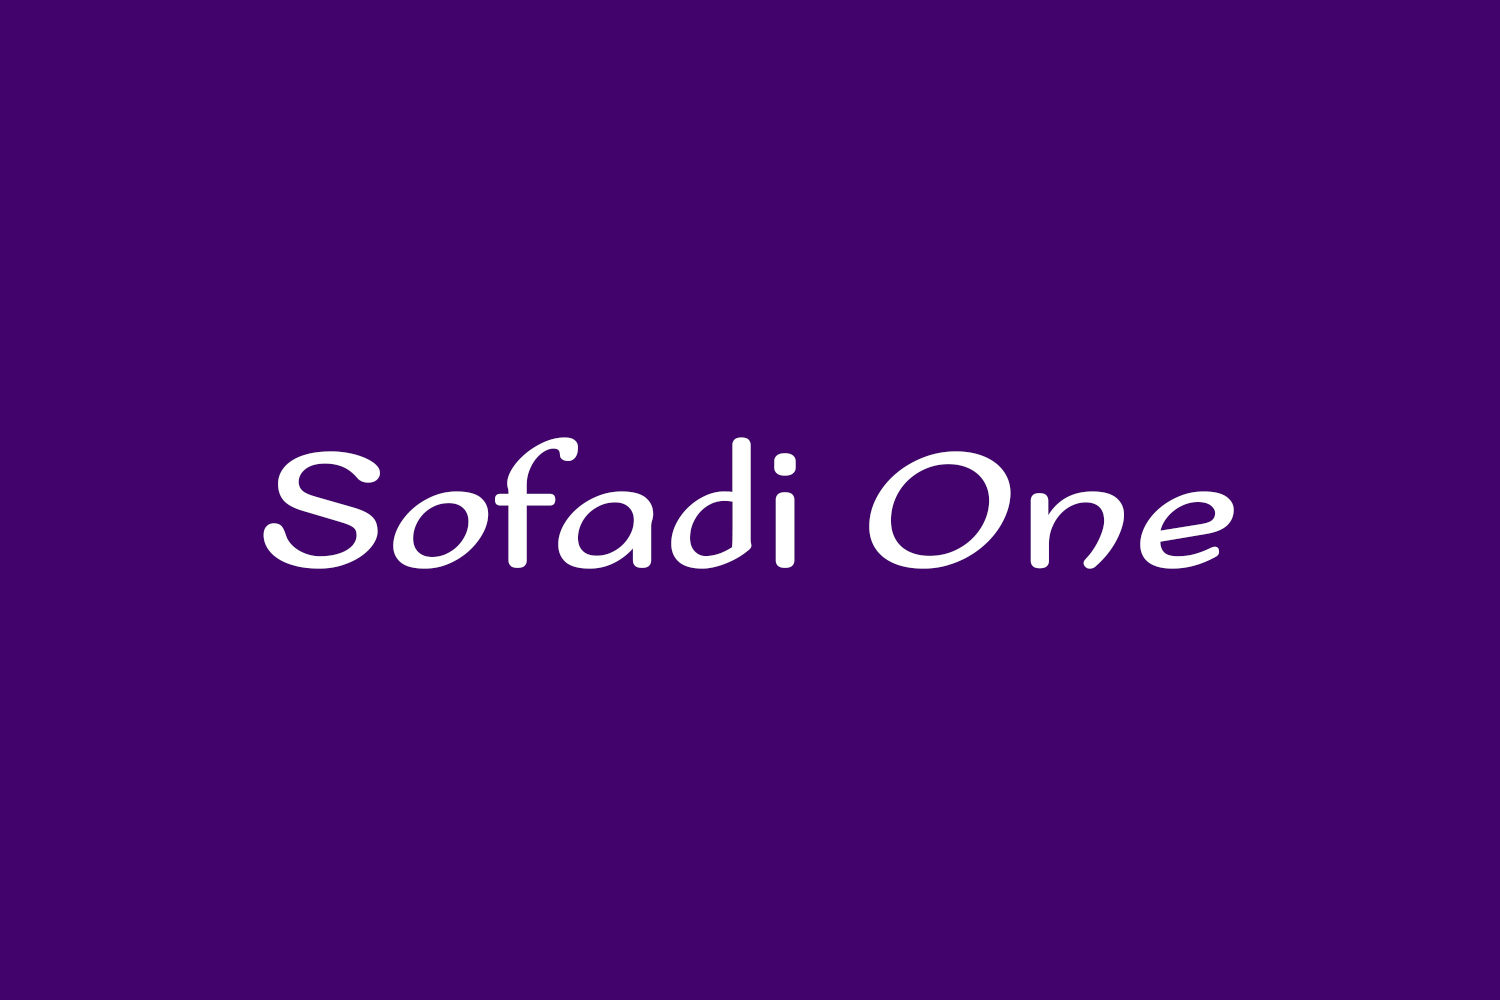 Sofadi One